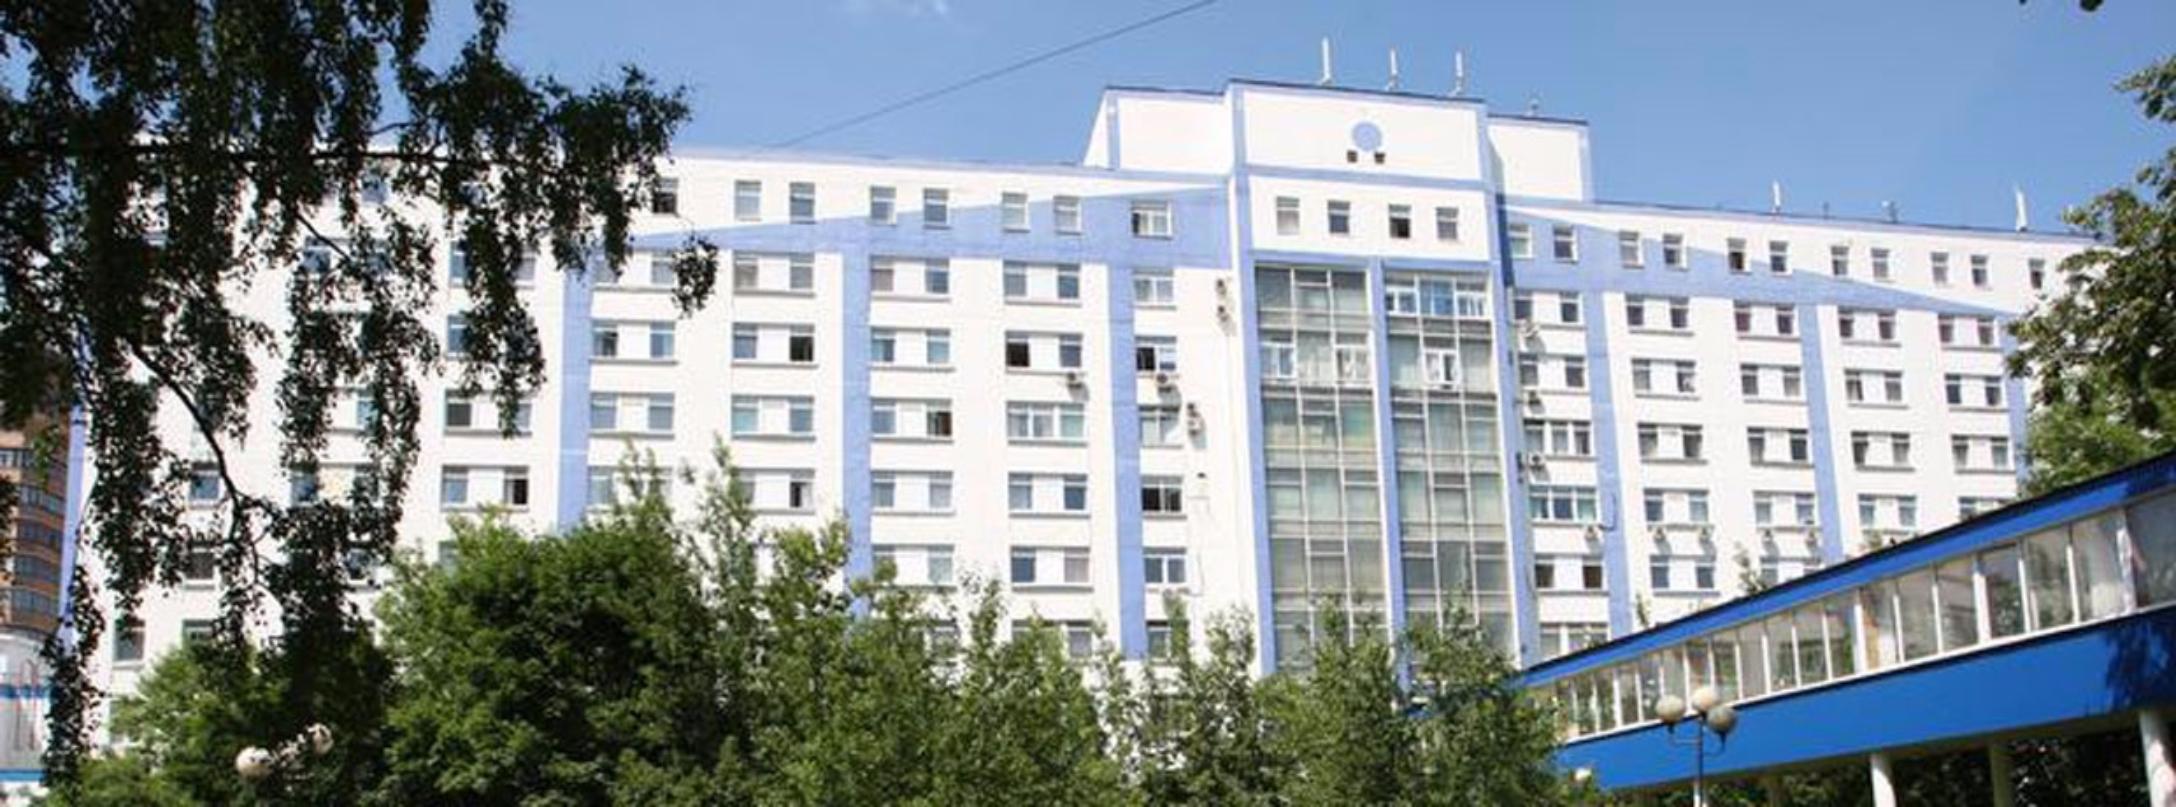 ЦРИ Царицыно - Реабилитационный центр